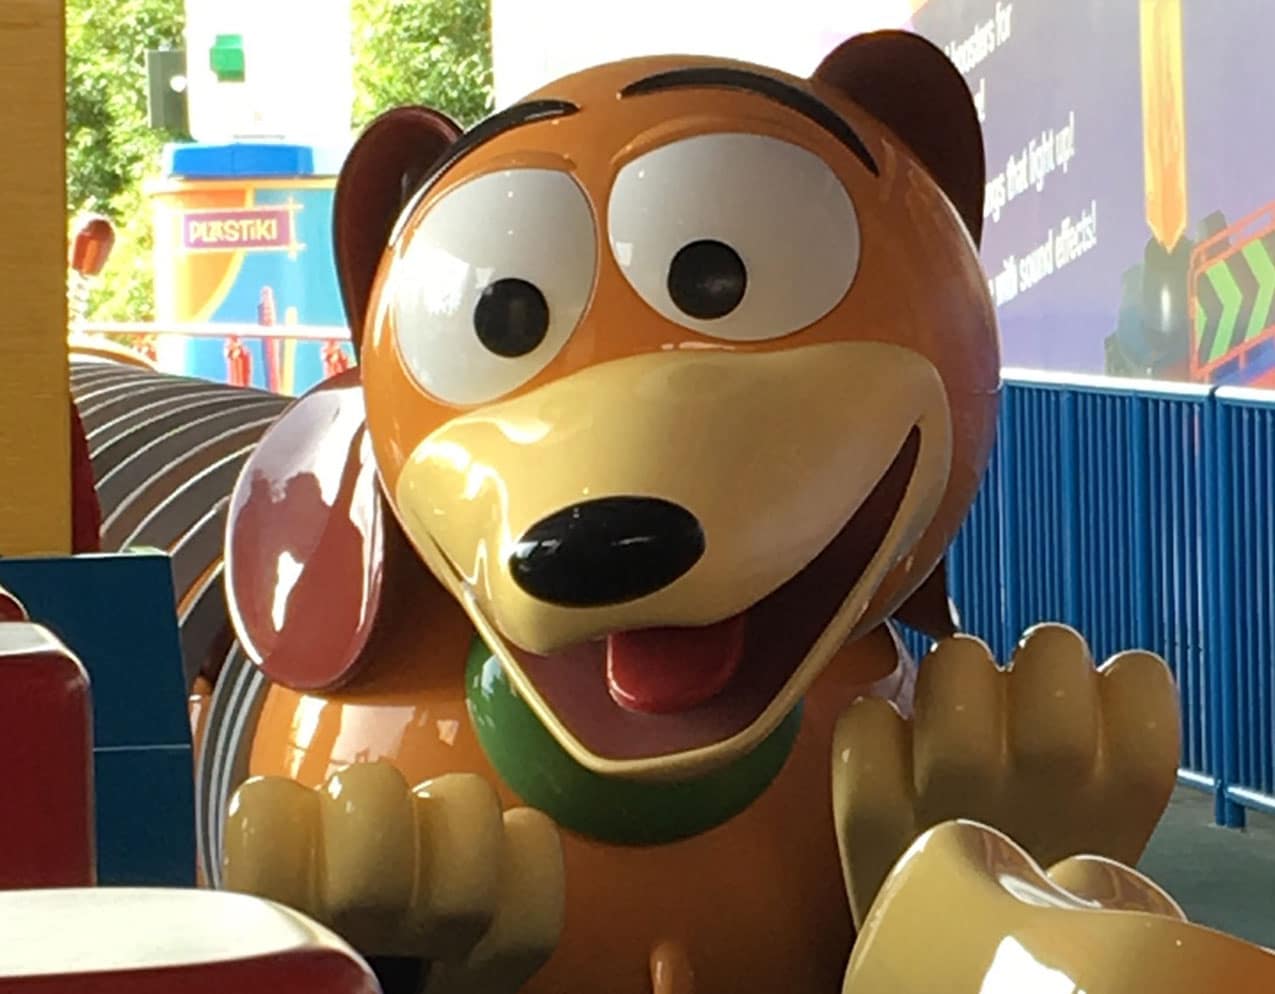 Slinky dog dash at Disney World